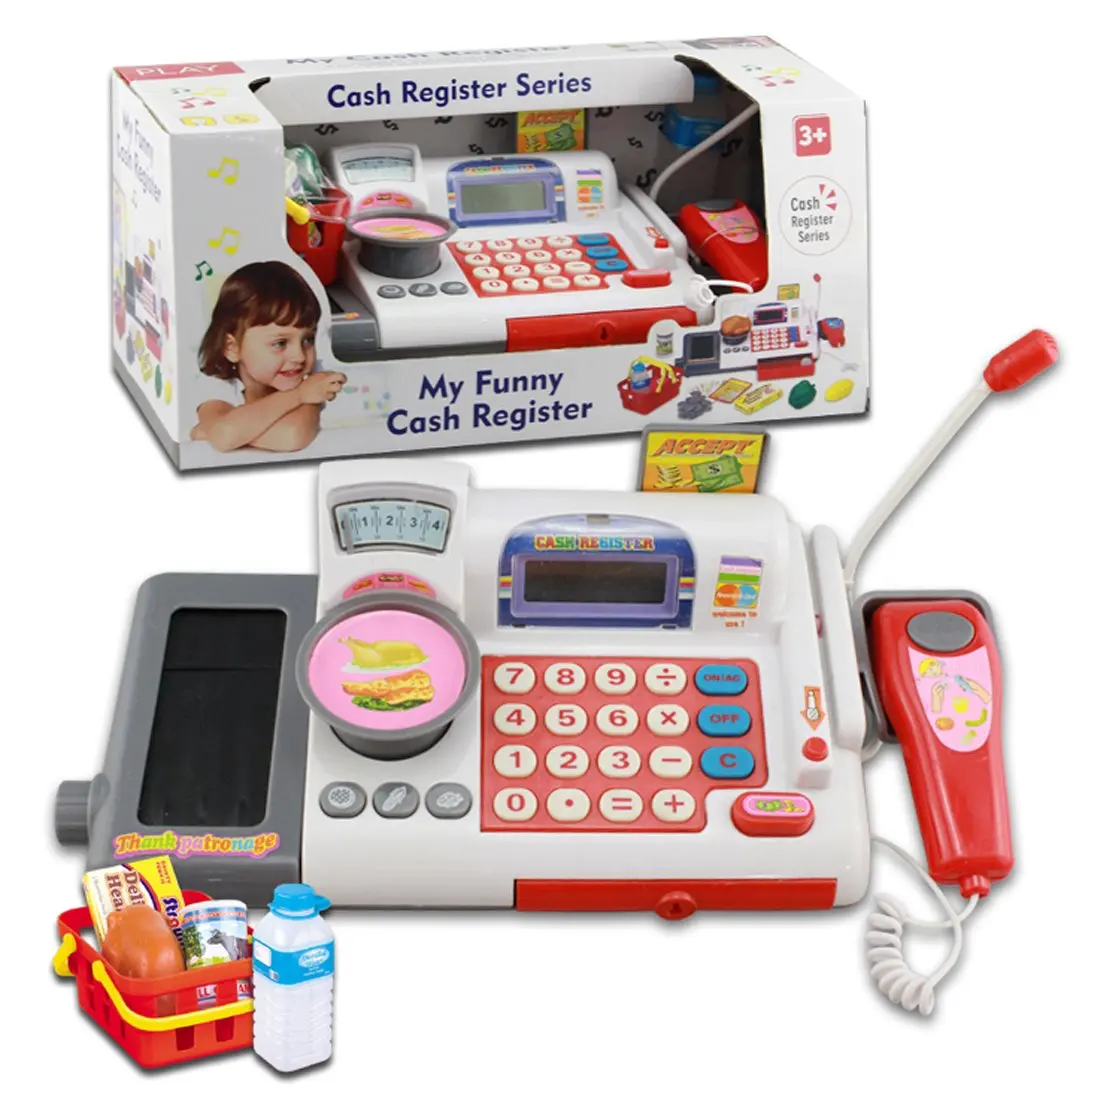 Kiddie Play Toy Cash Register for Kids